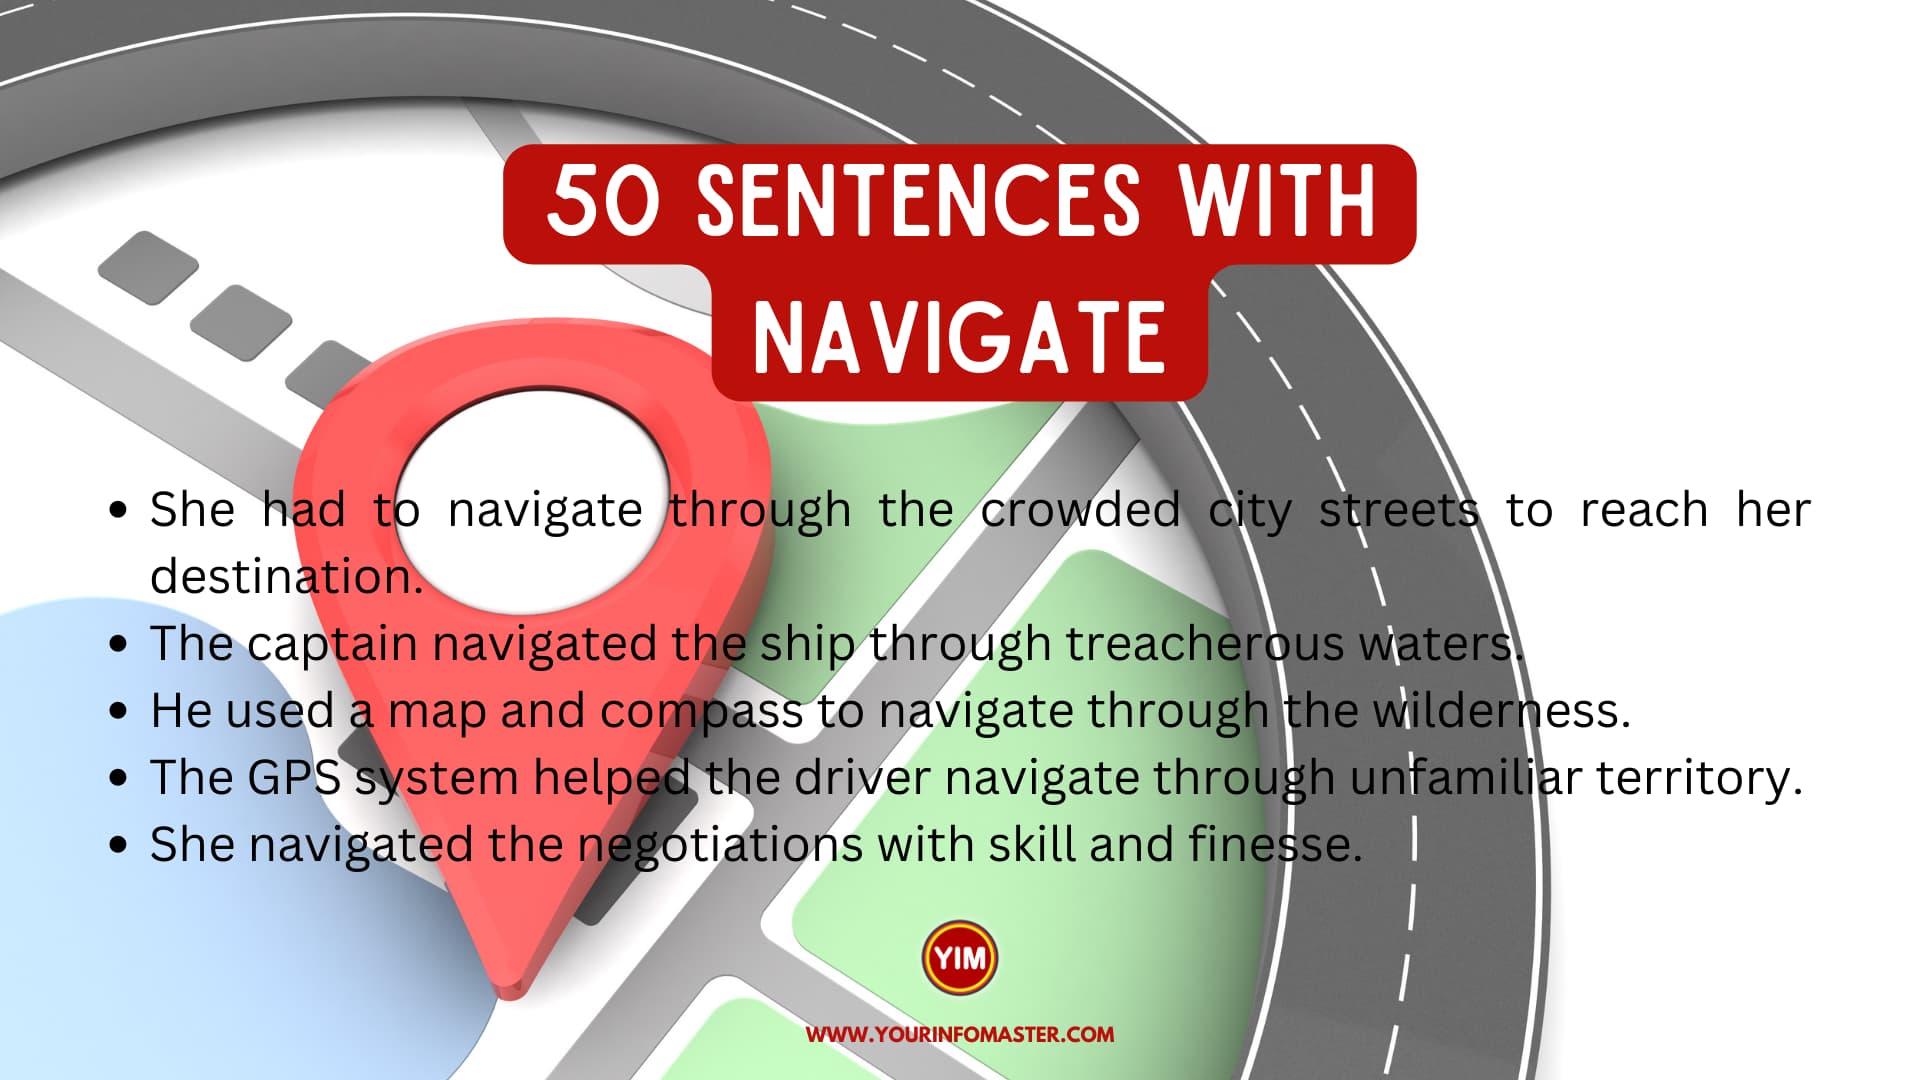 50 Sentences with Navigate